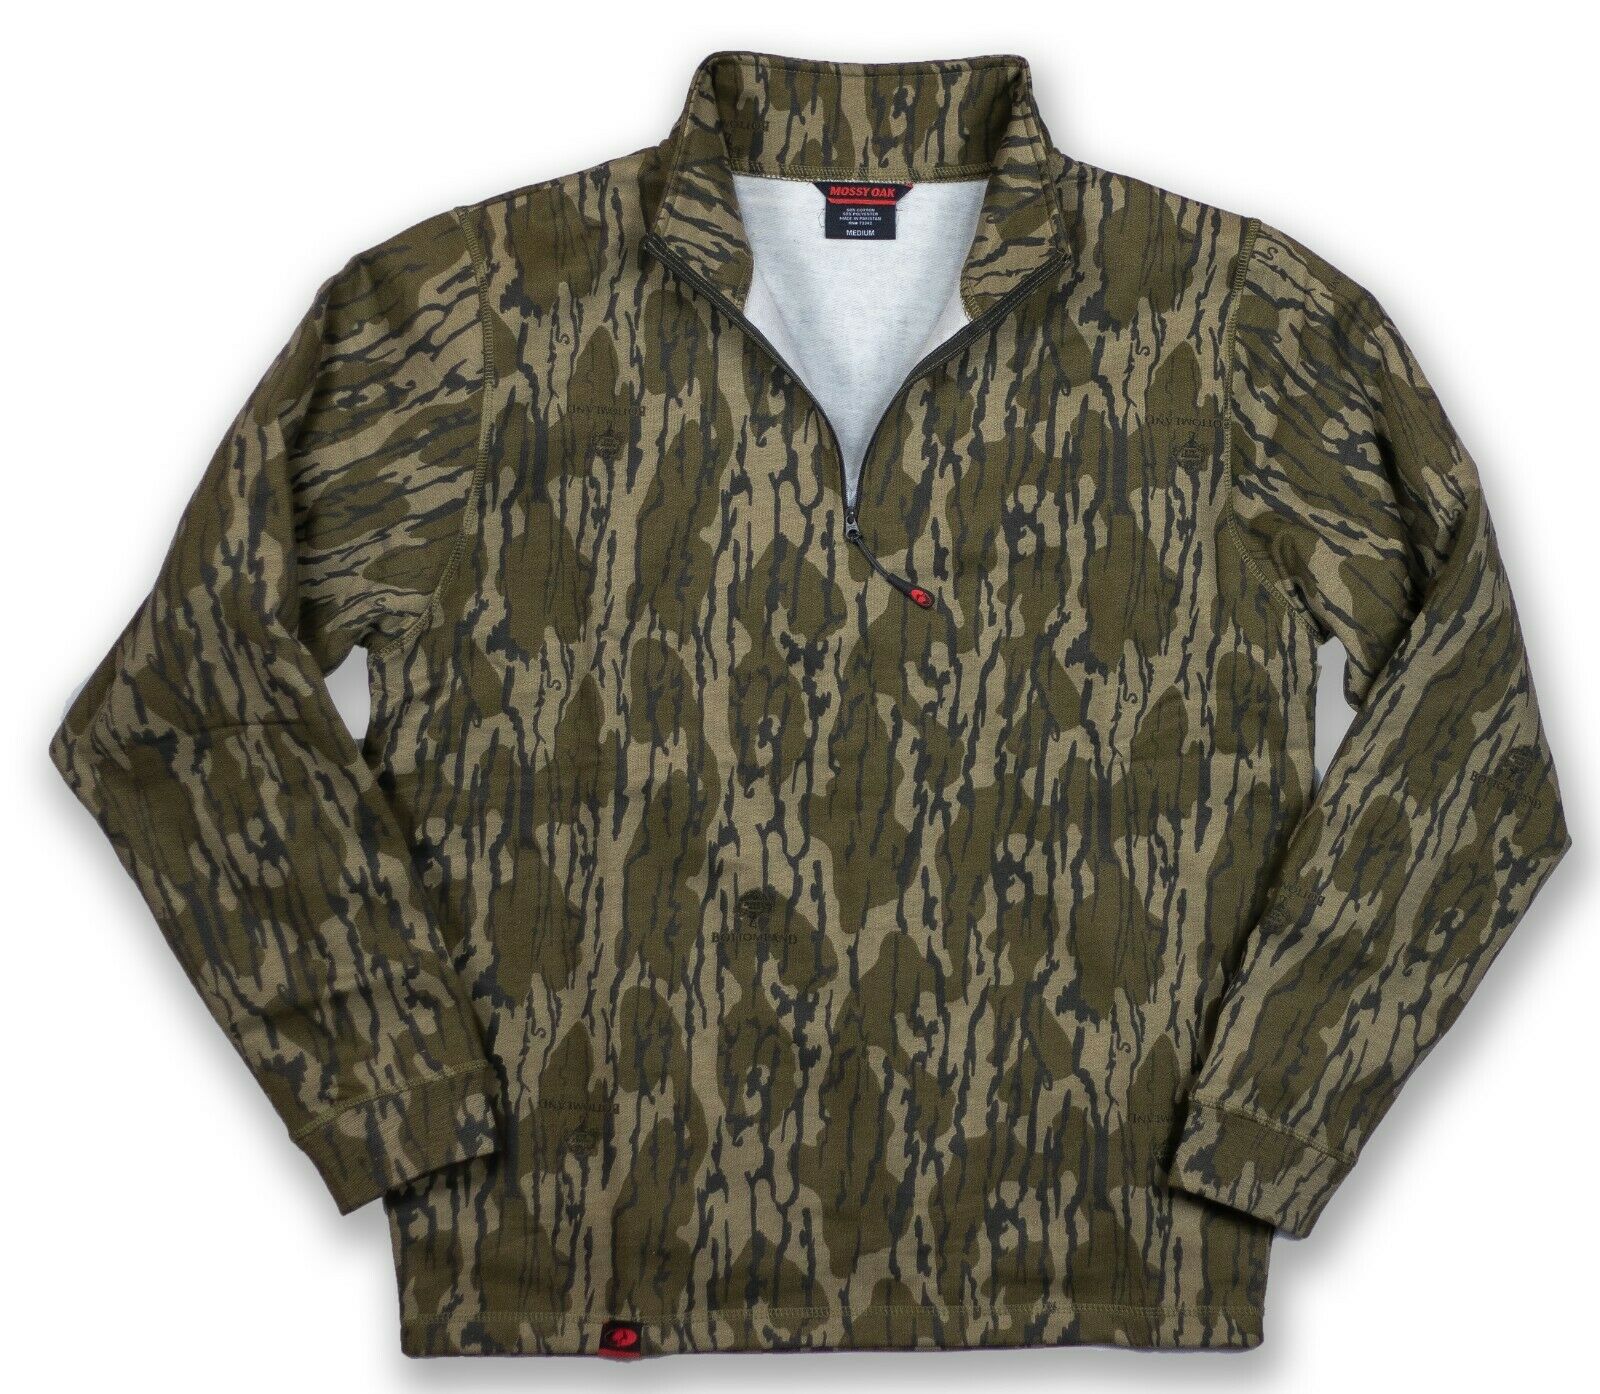 Mossy Oak Vintage 1/4 Zip Jacket, Camo Pullover